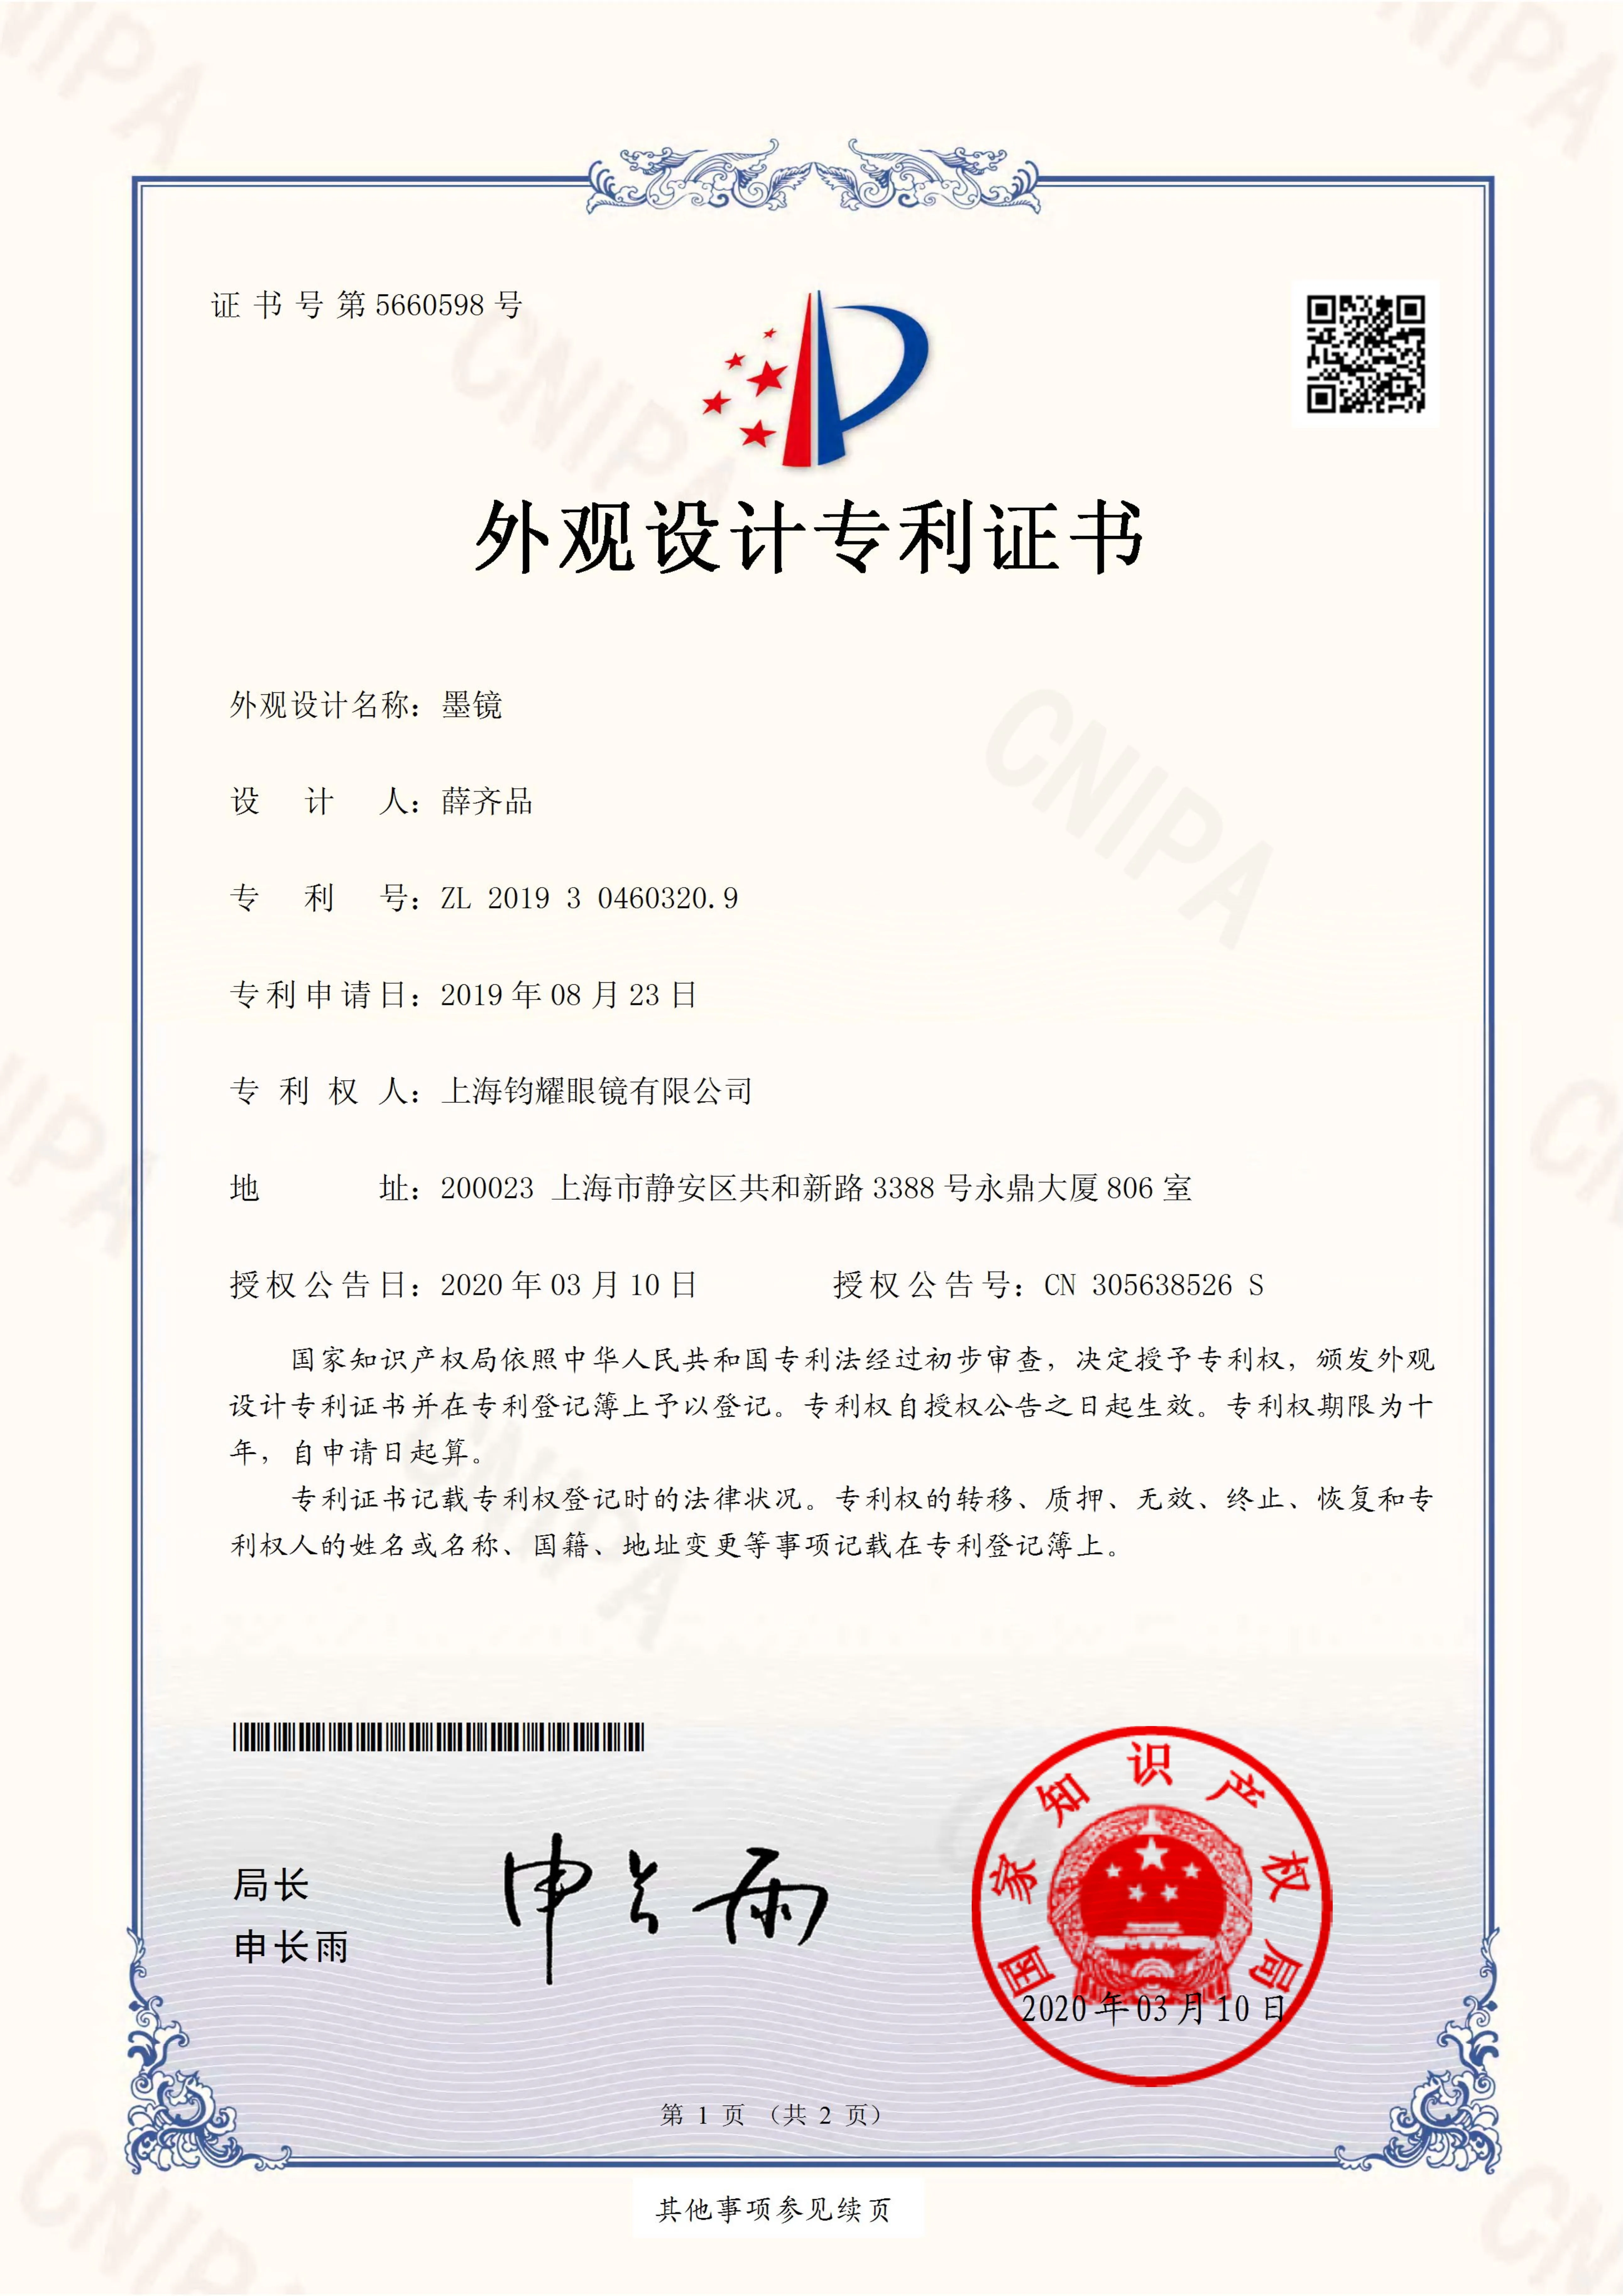 Appearance patent design certificate